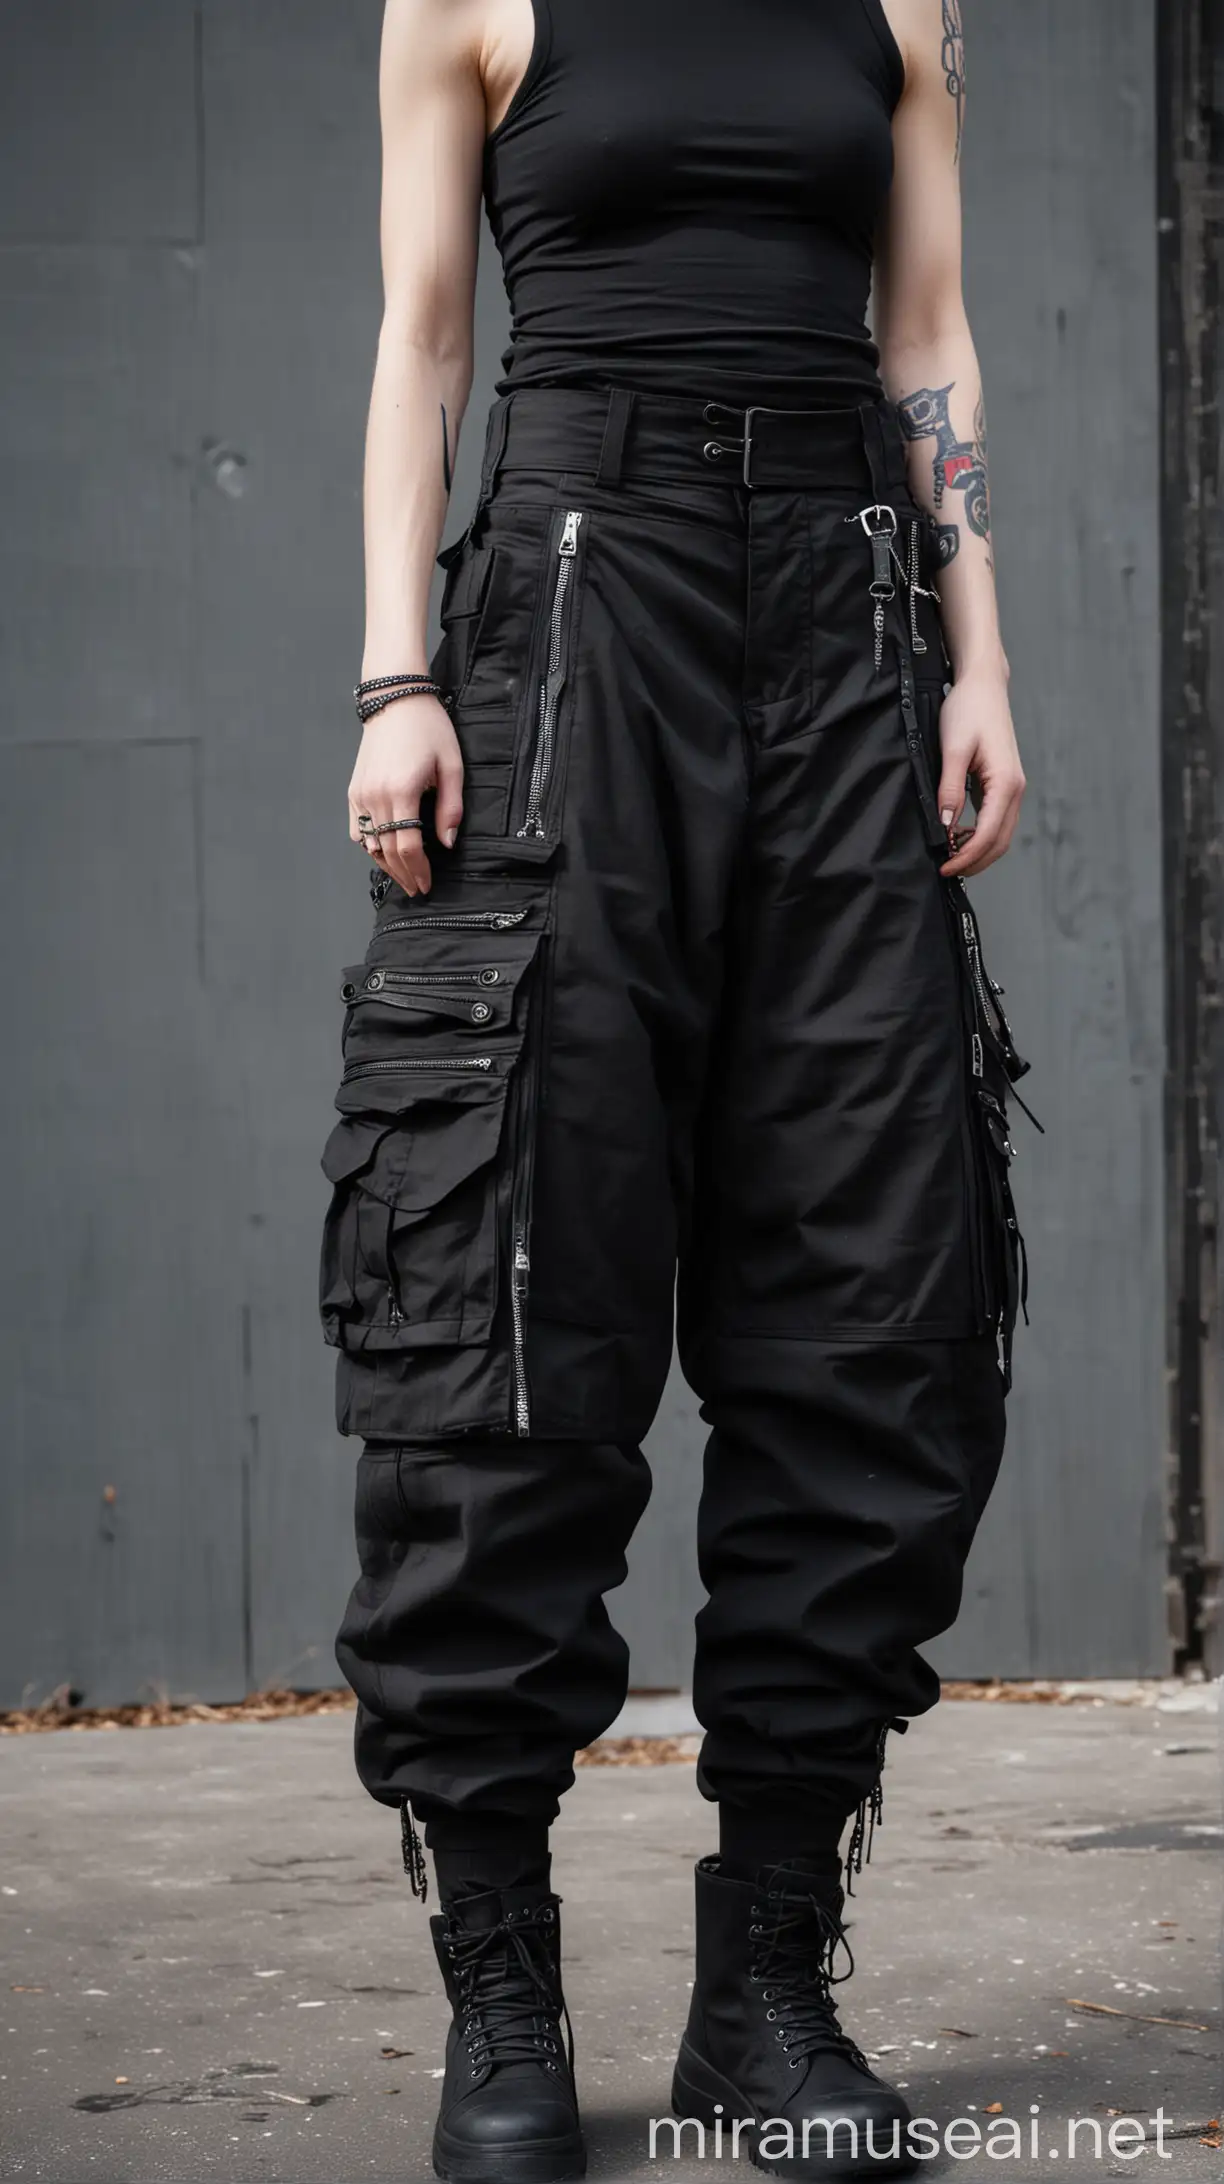 Cyberpunk Style Black Cargo Pants with Zippers Futuristic Urban Fashion